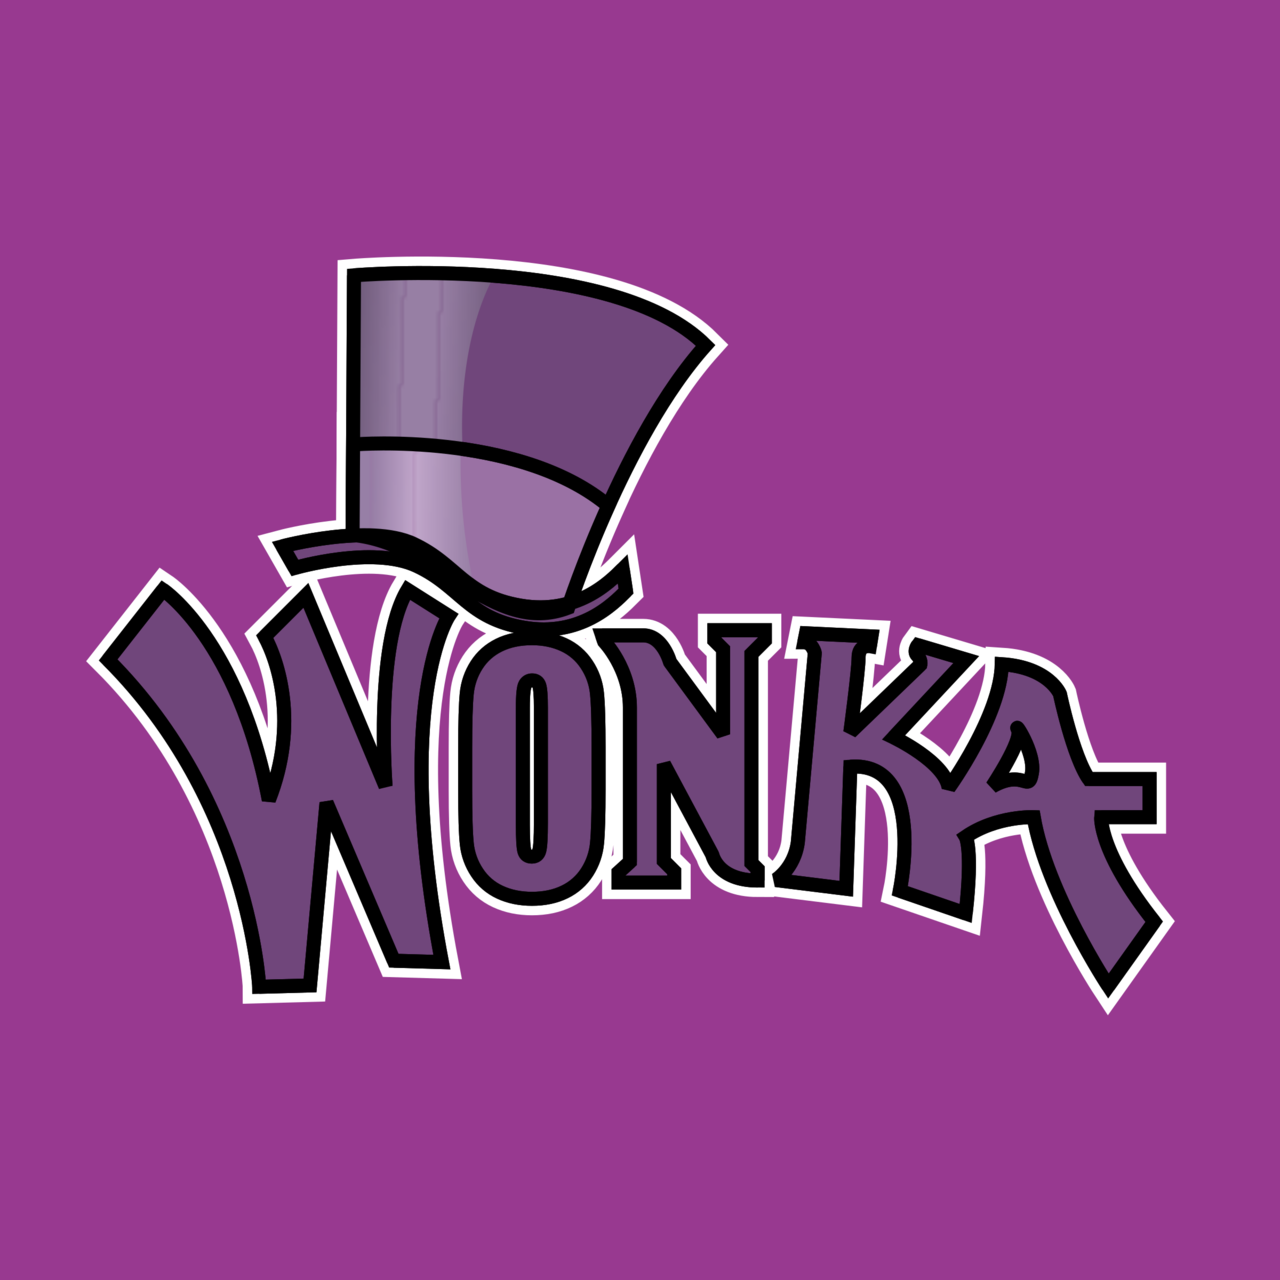 Download Wonka Logo PNG and Vector (PDF, SVG, Ai, EPS) Free